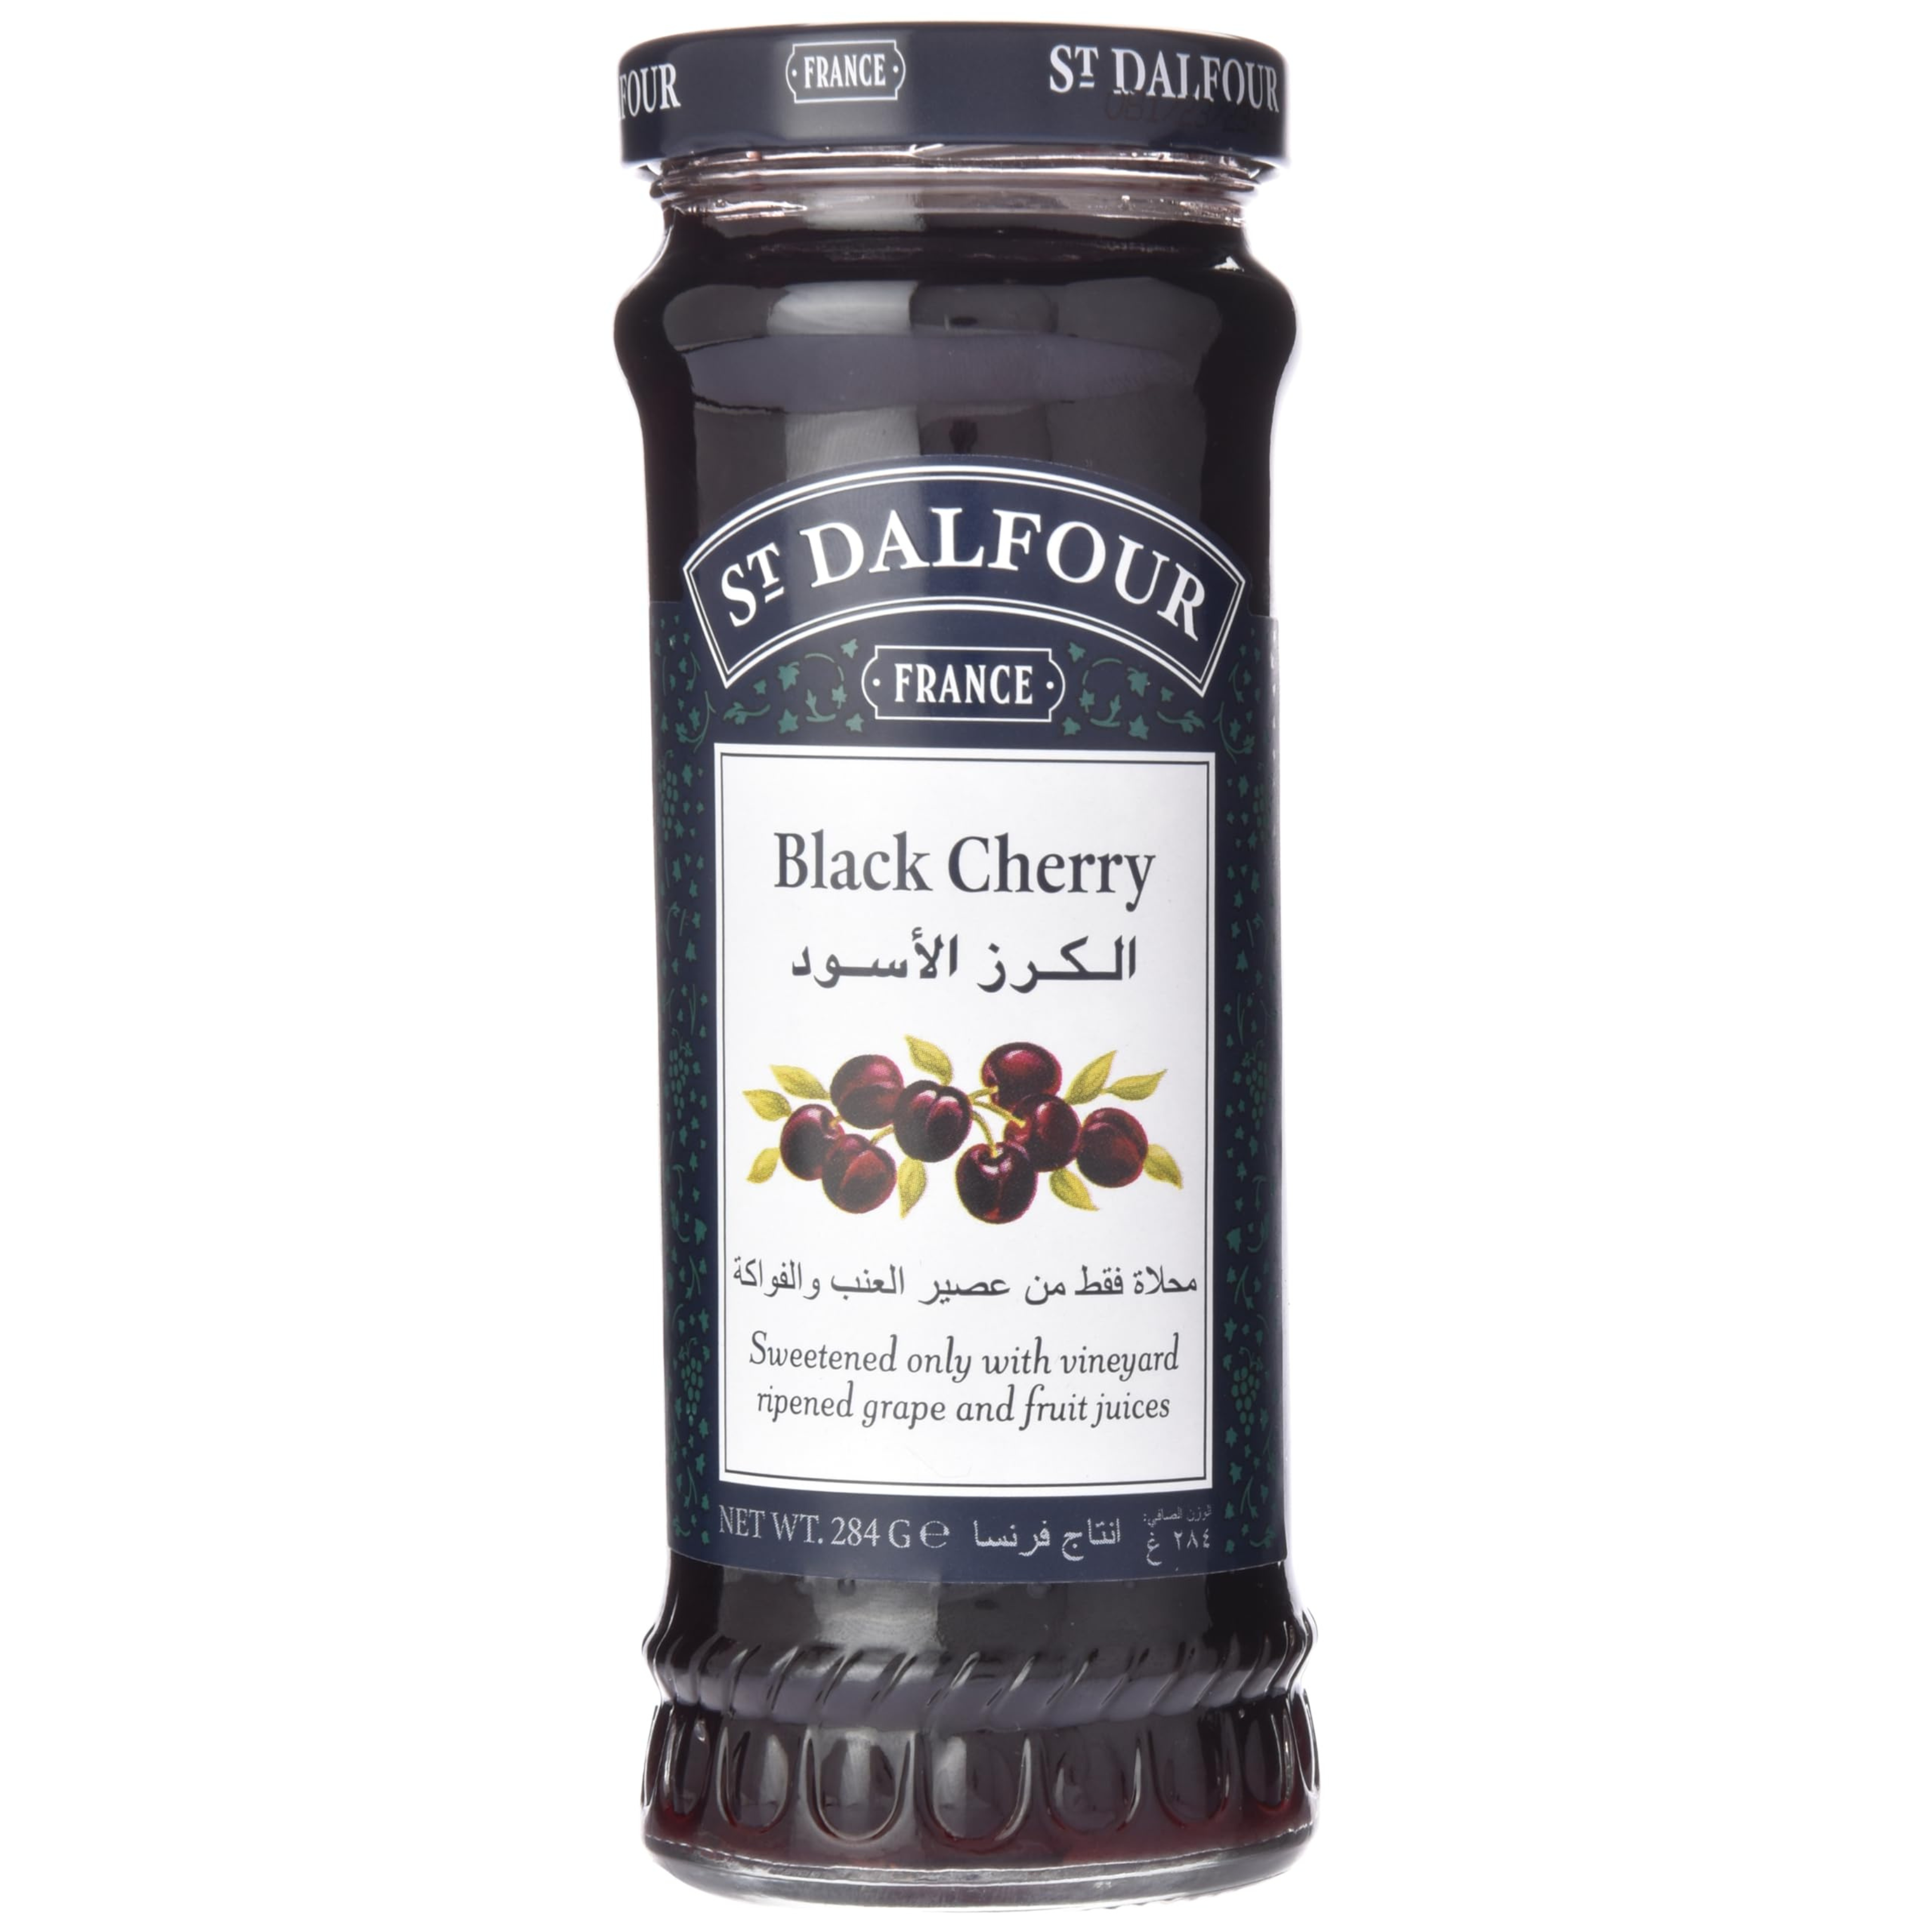 St. Dalfour Black Cherry Jam, 284g - Pack of 1